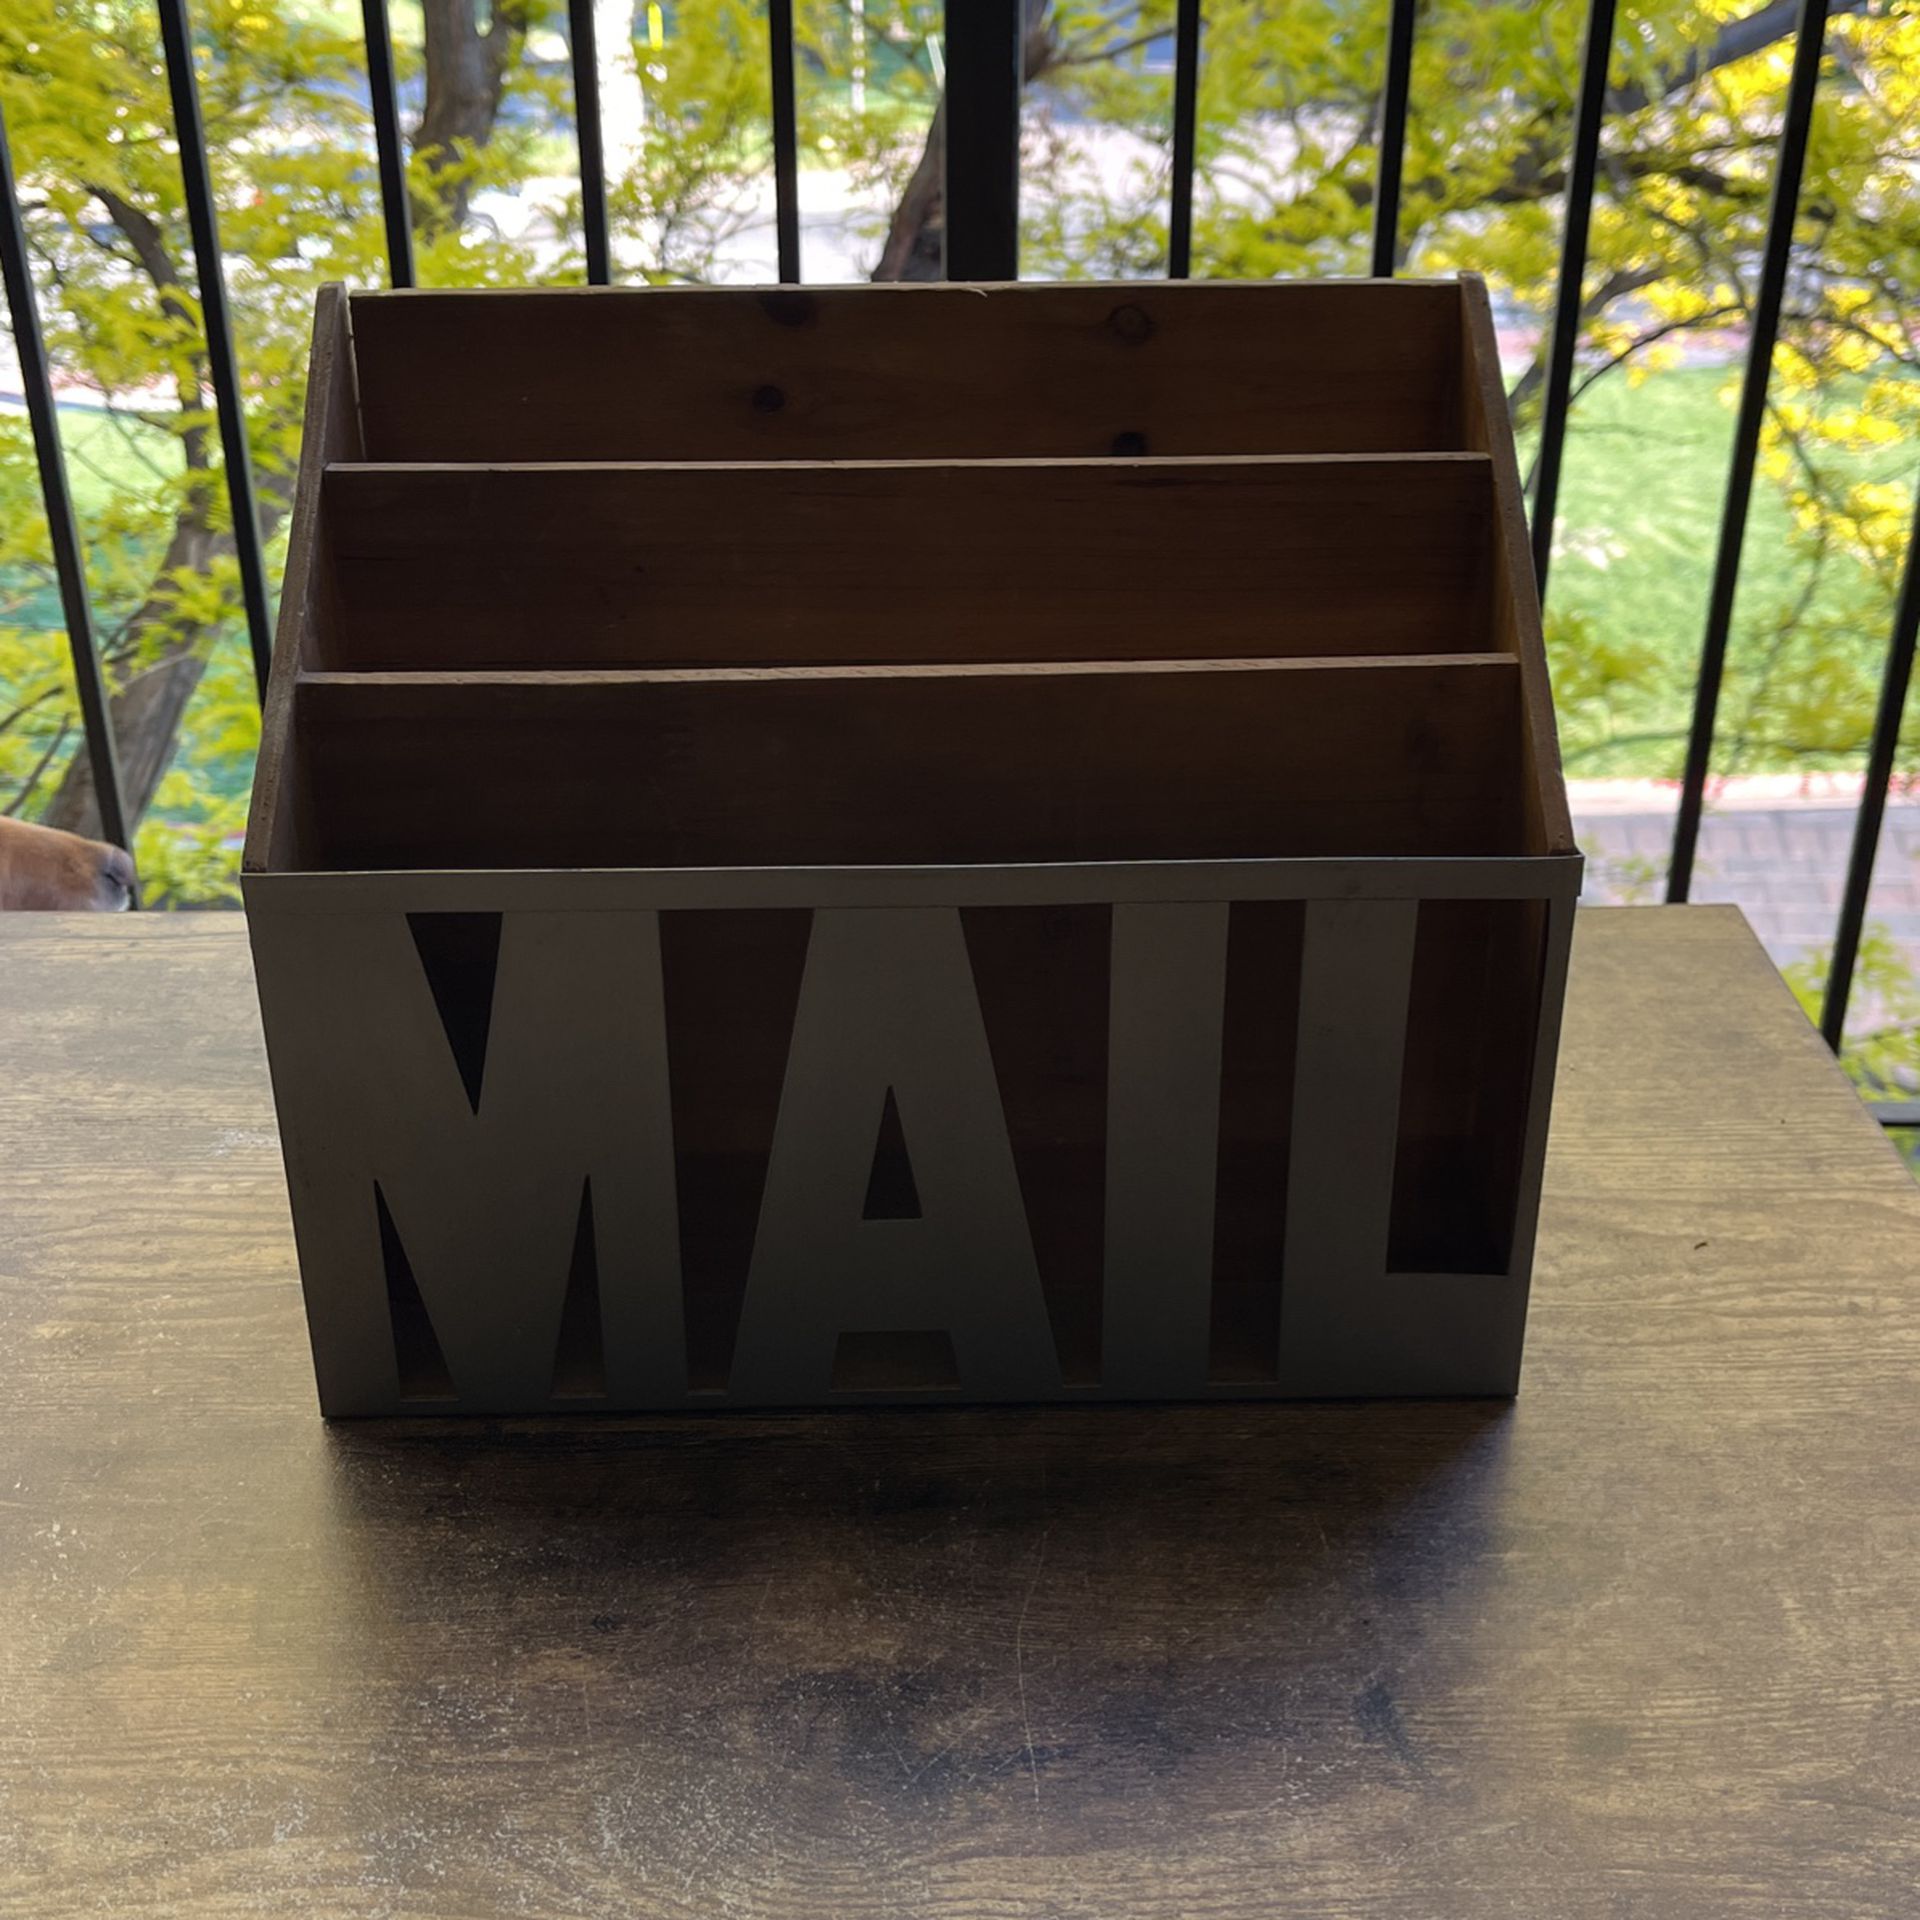 Mail Holder Decor